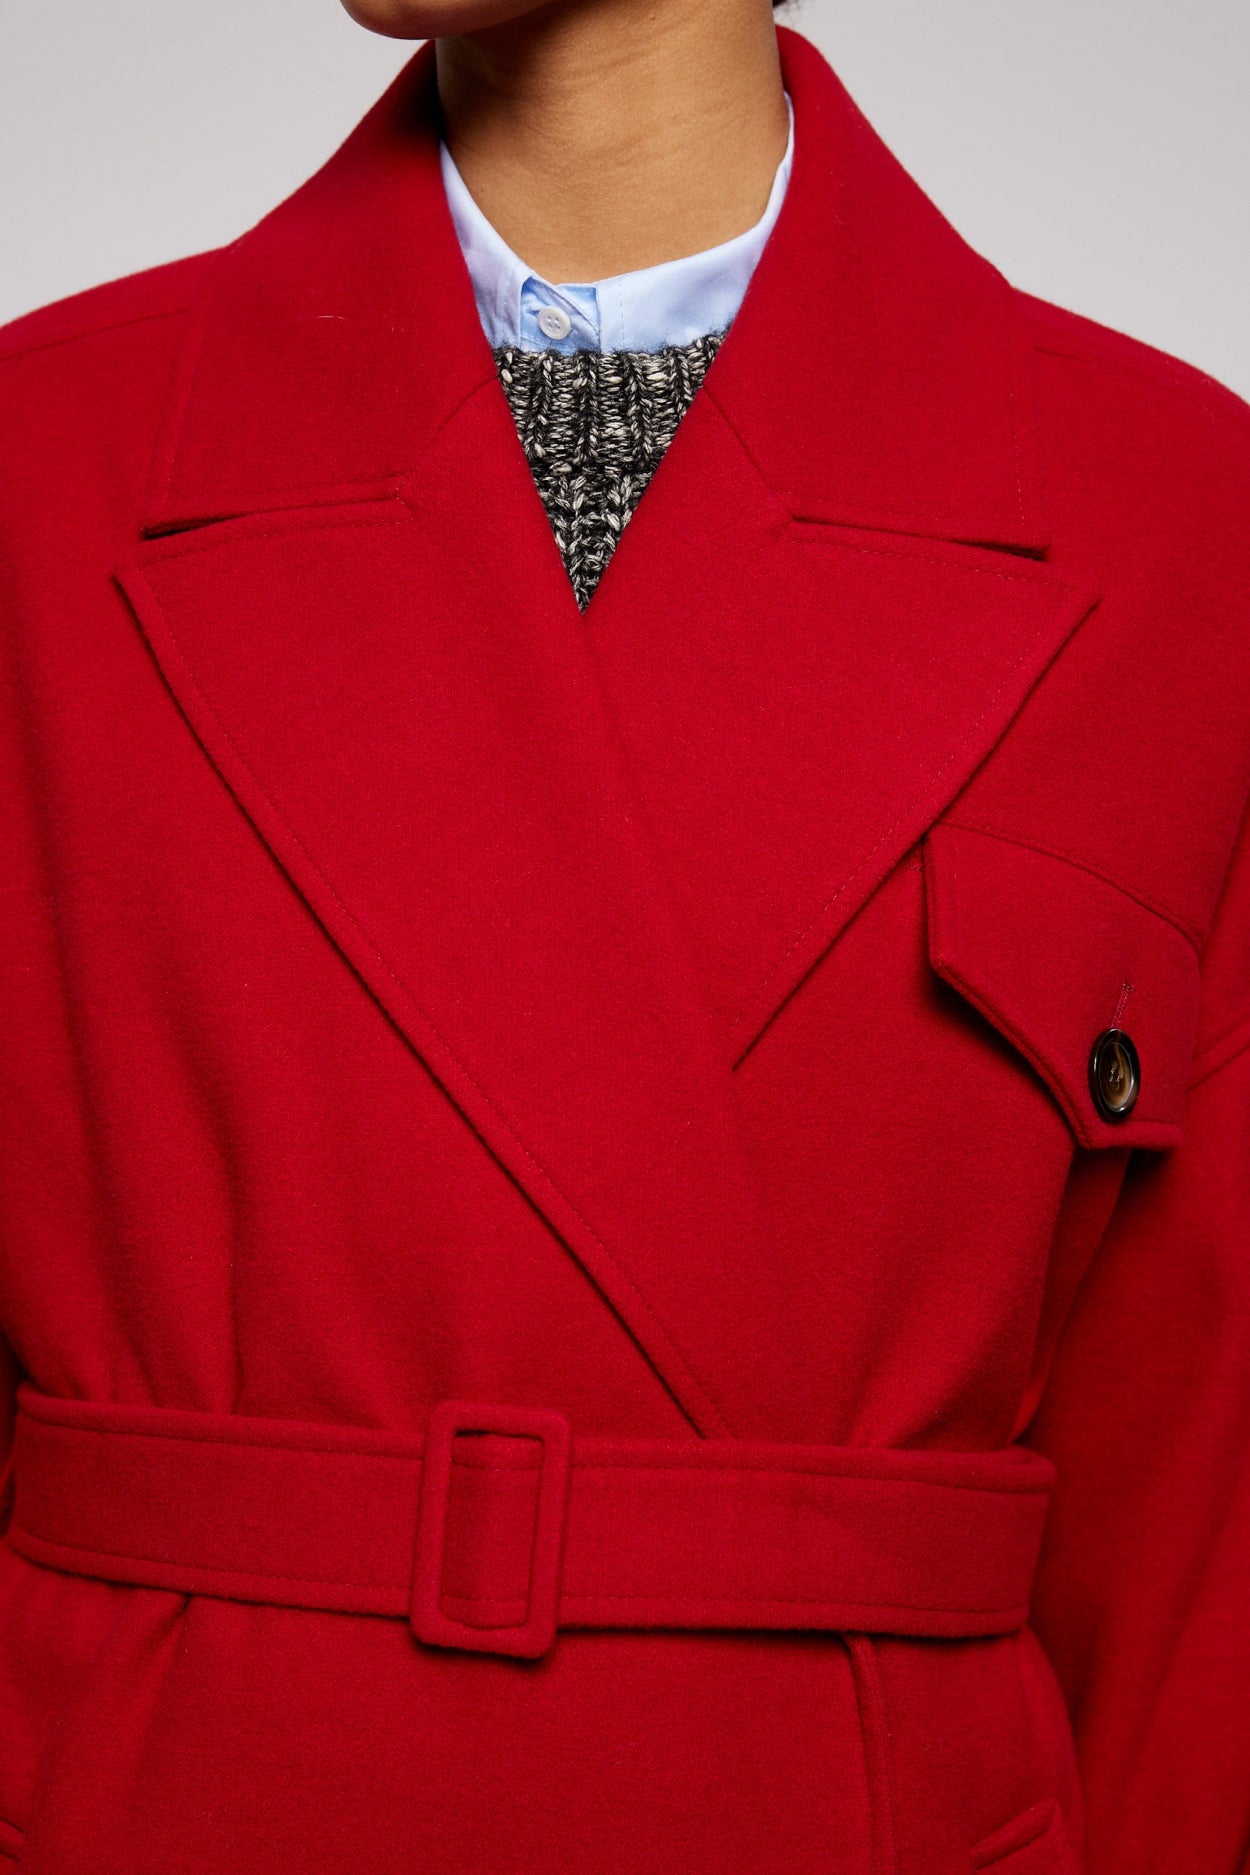 CAMERON coat | RED